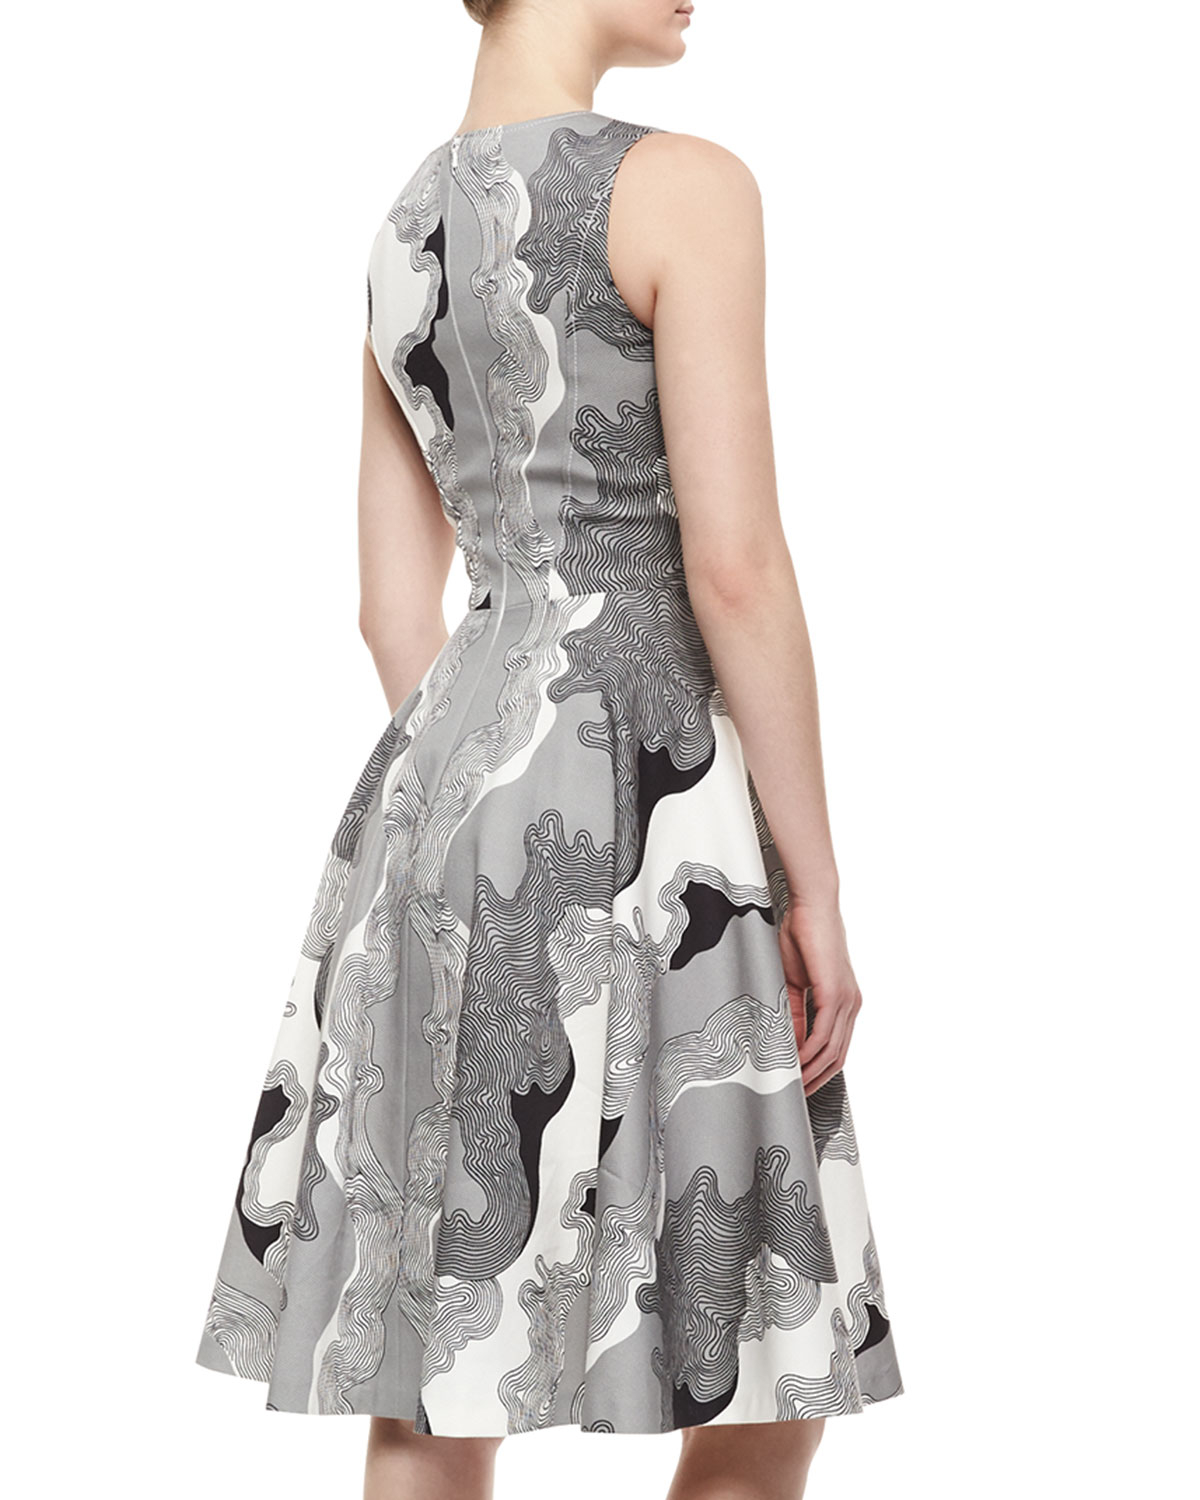 Lyst - Carolina herrera Lava-Print Fit-And-Flare Dress in Gray